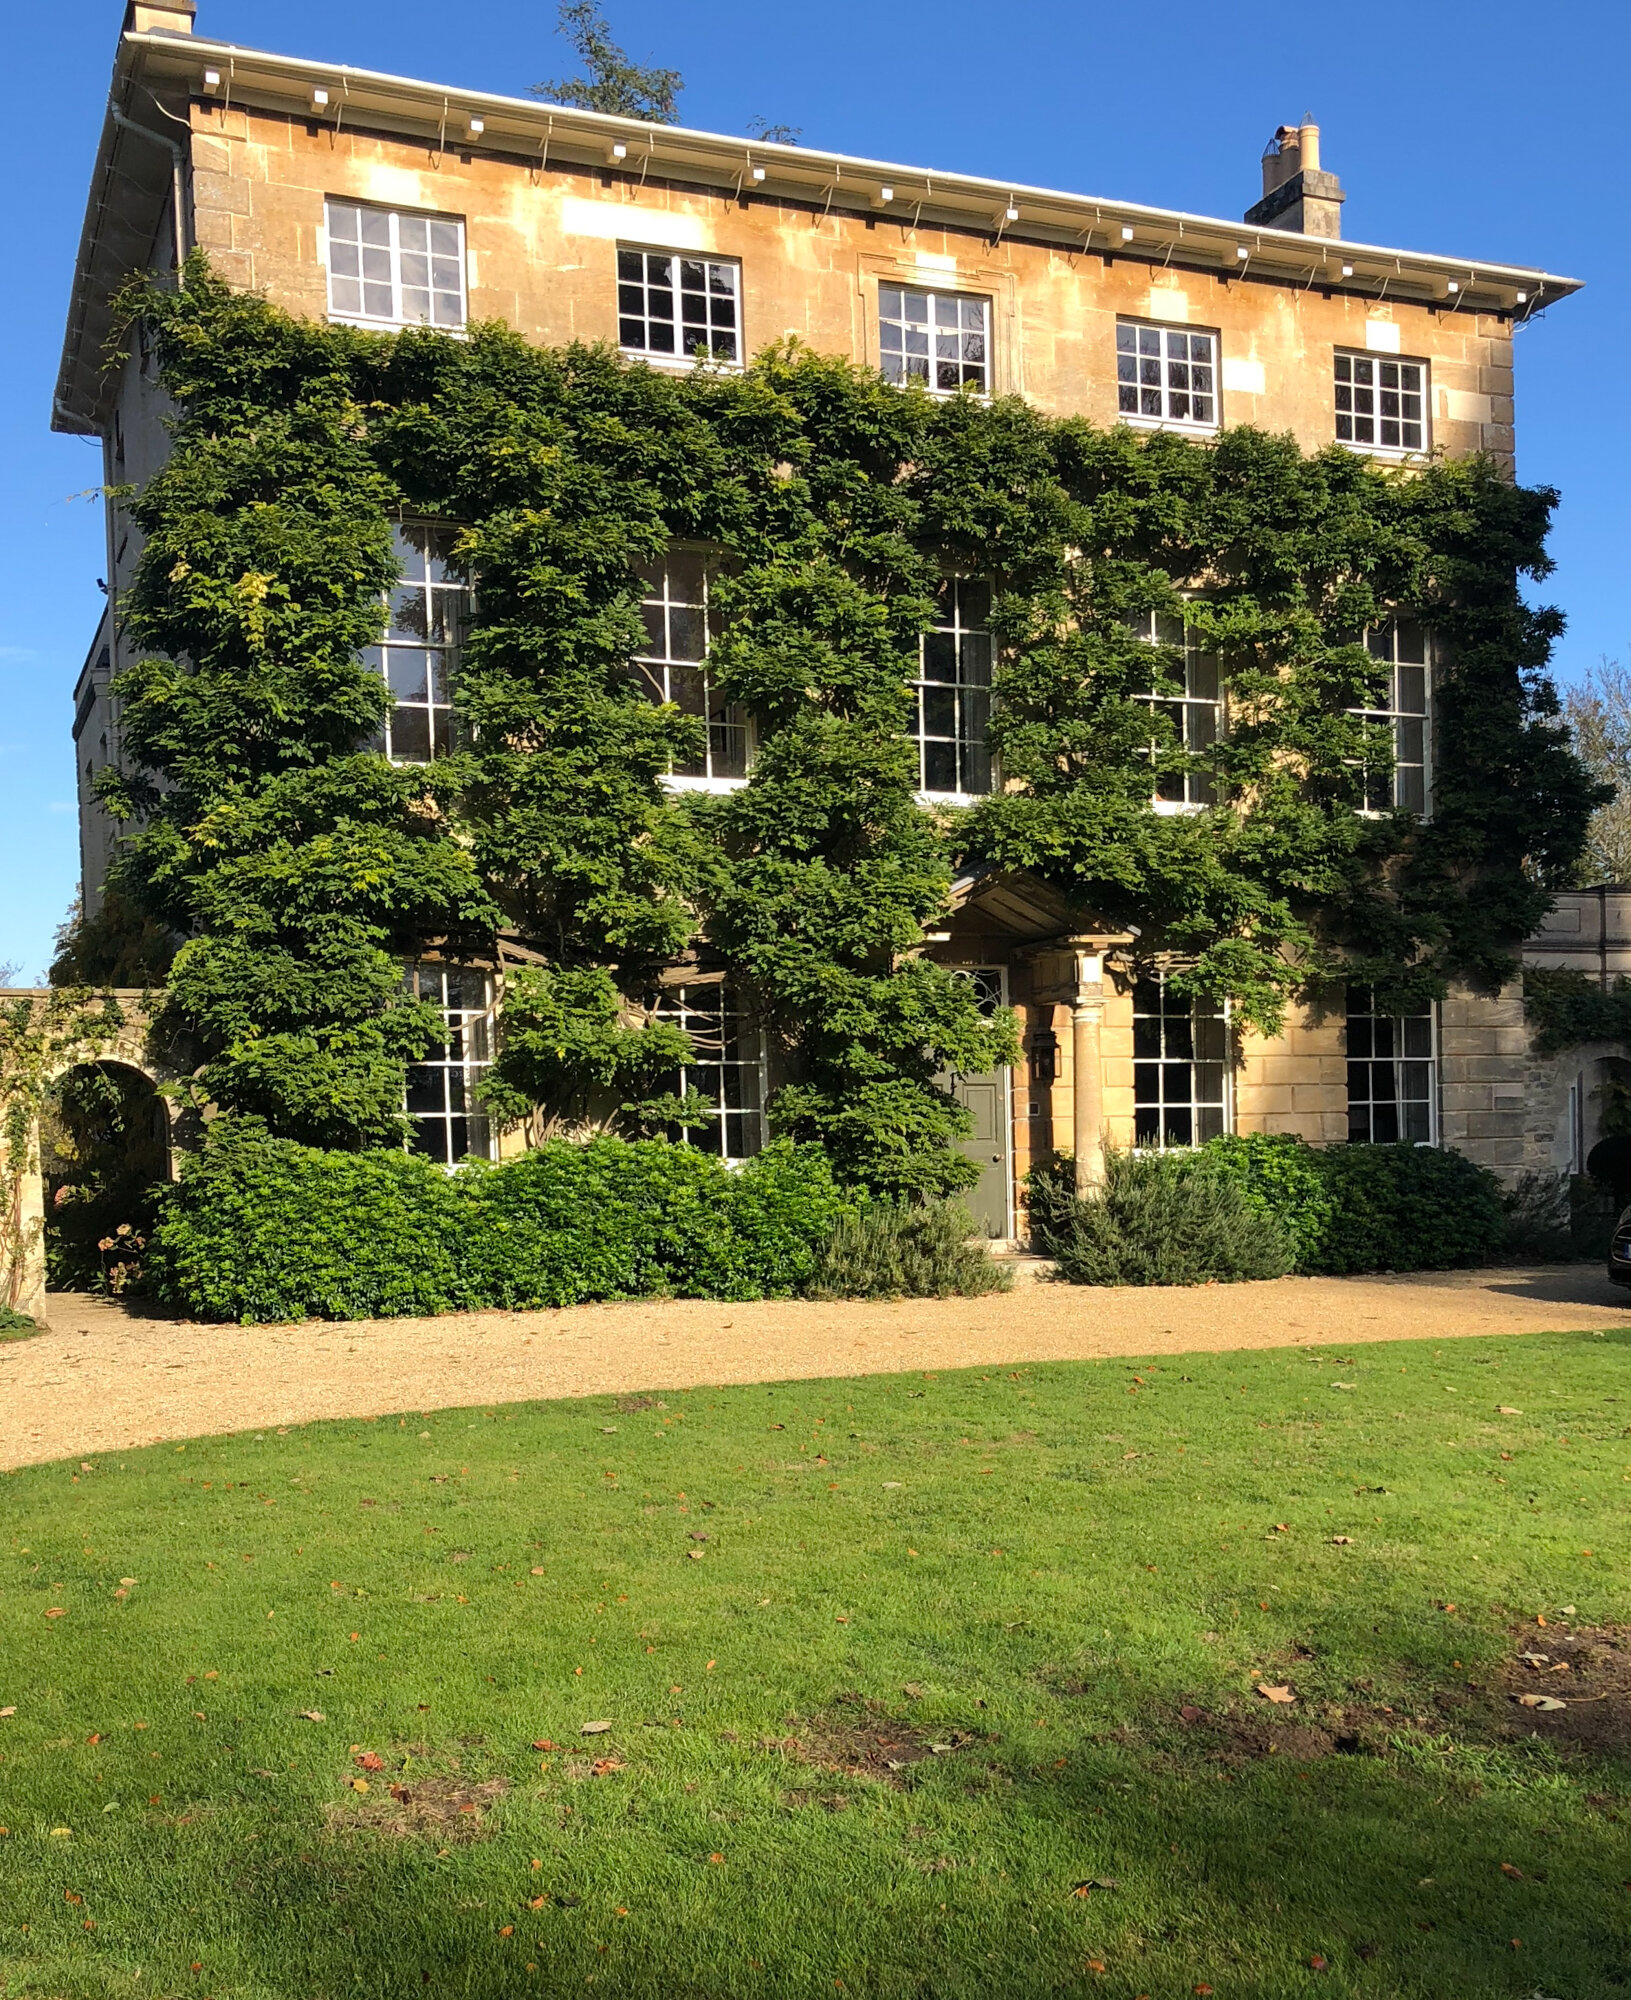 Isaiah Berlin's former home in Headington, Oxford